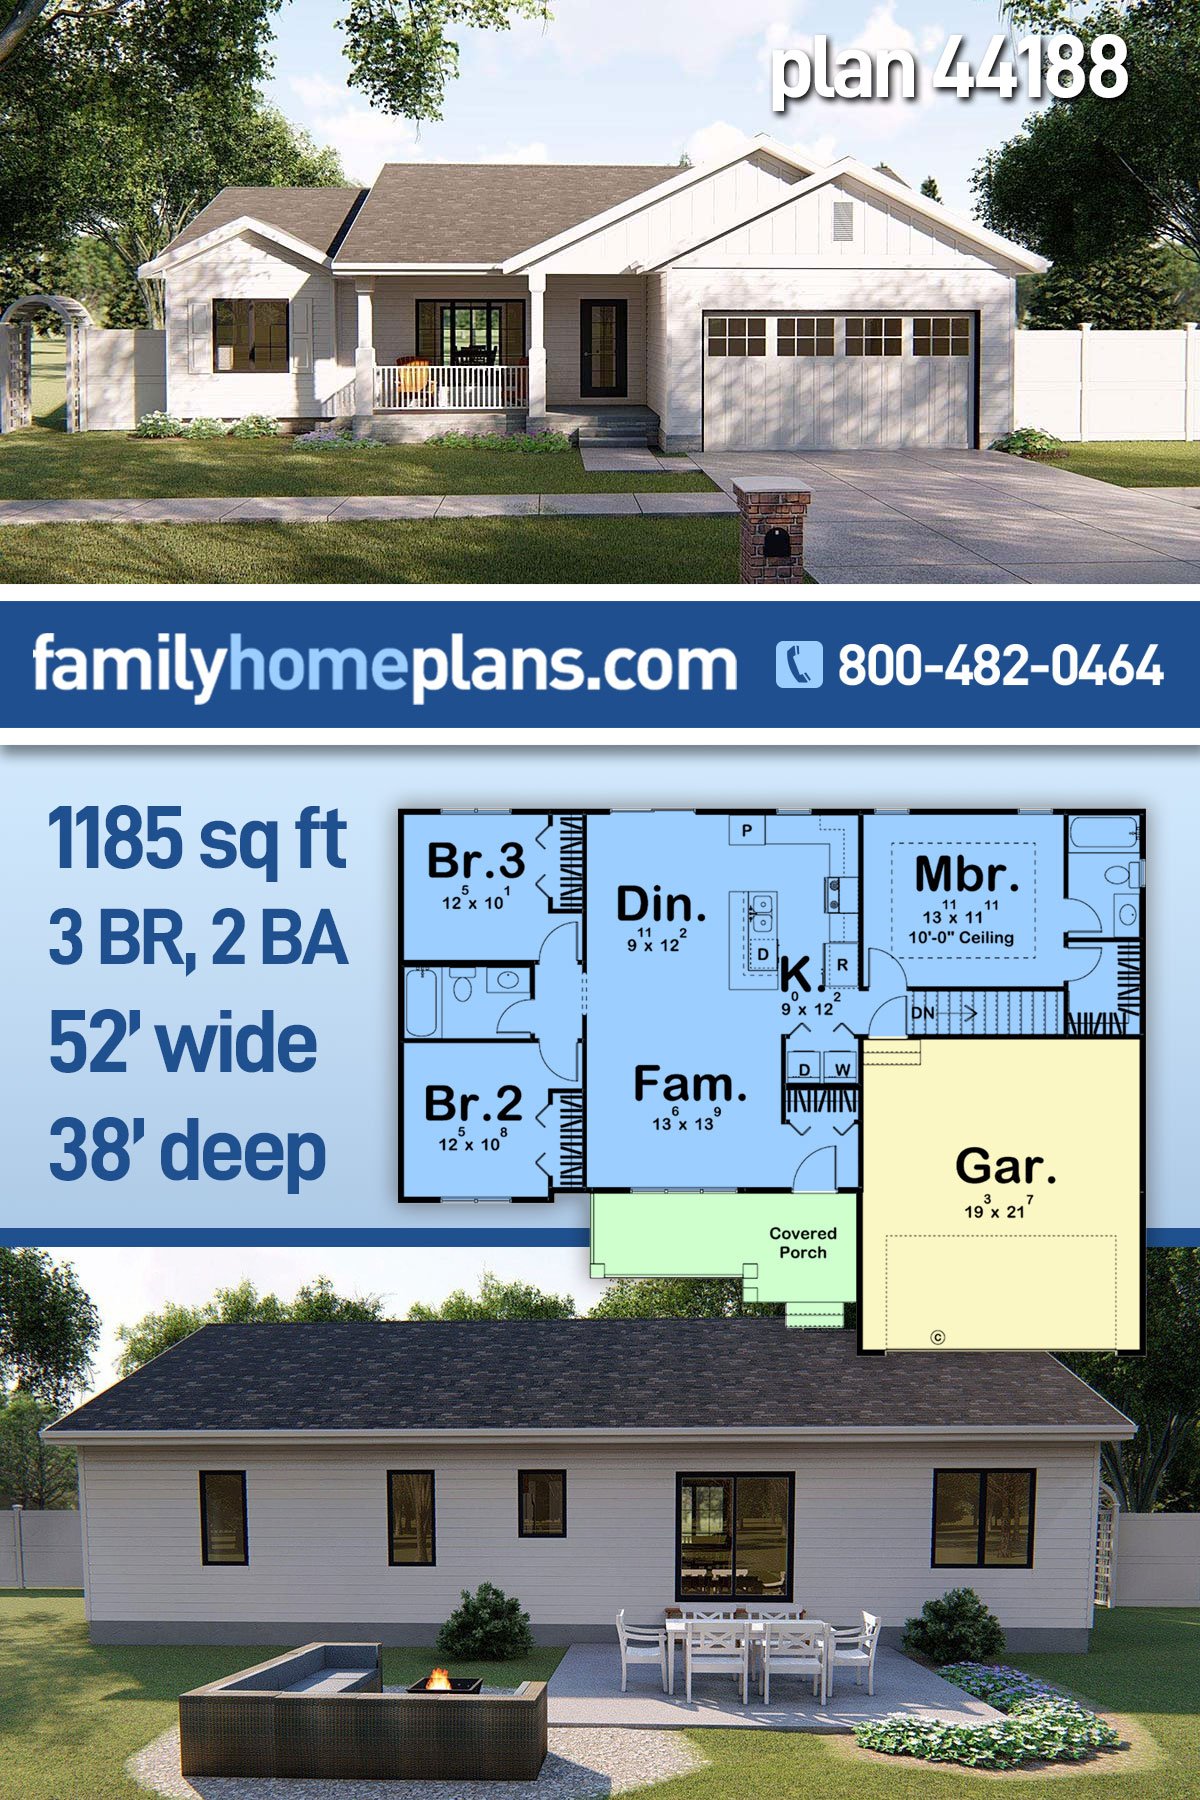 House Plan 44188